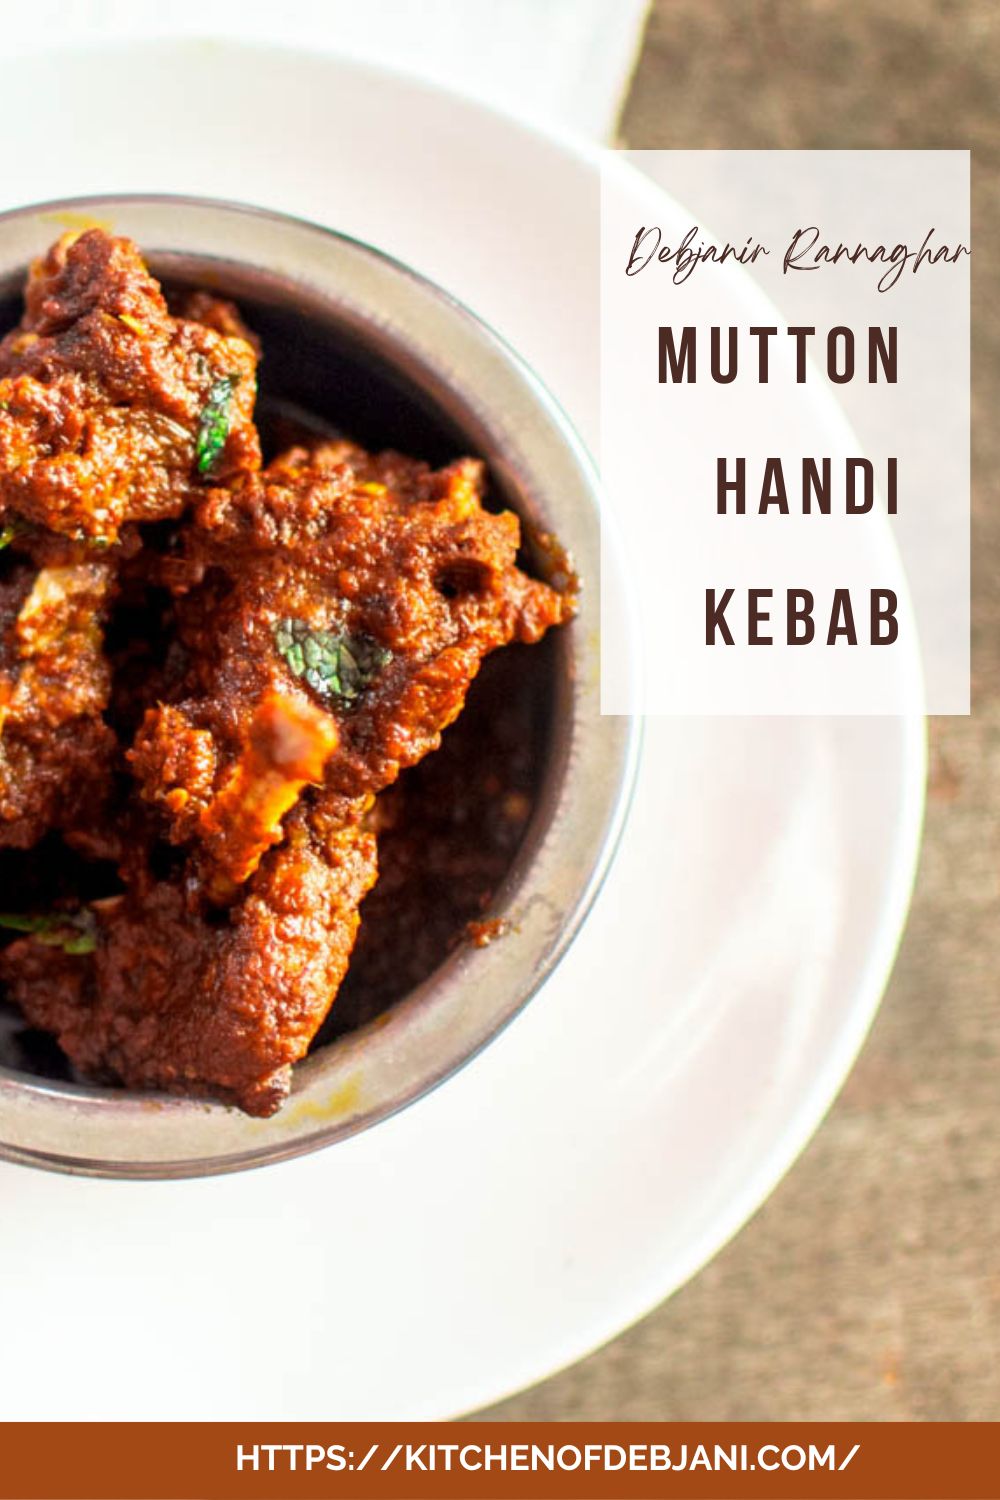 %Mutton Handi Kebab Recipe Pinterest Pin